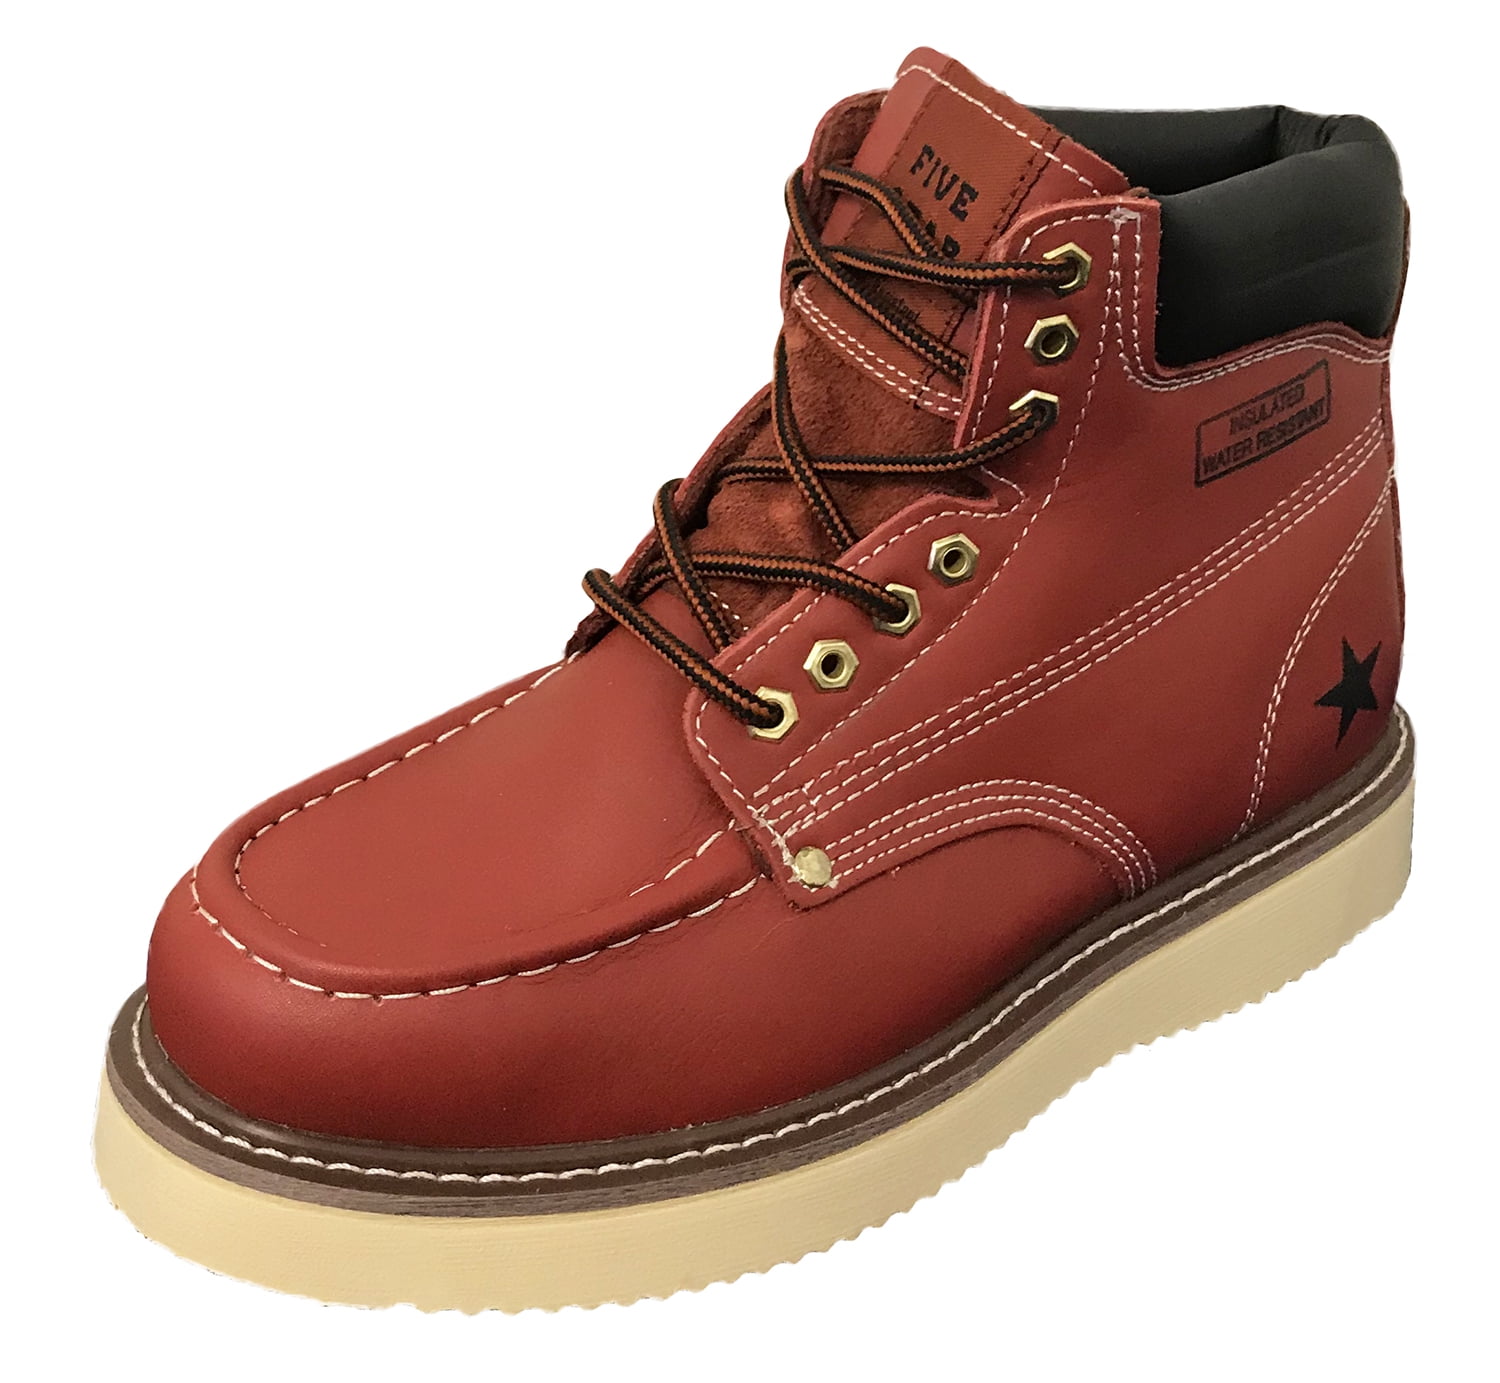 New Men's Light Brown 6" Moc Toe Leather WP Work Boots BA 655 Size 5-13 D, M 